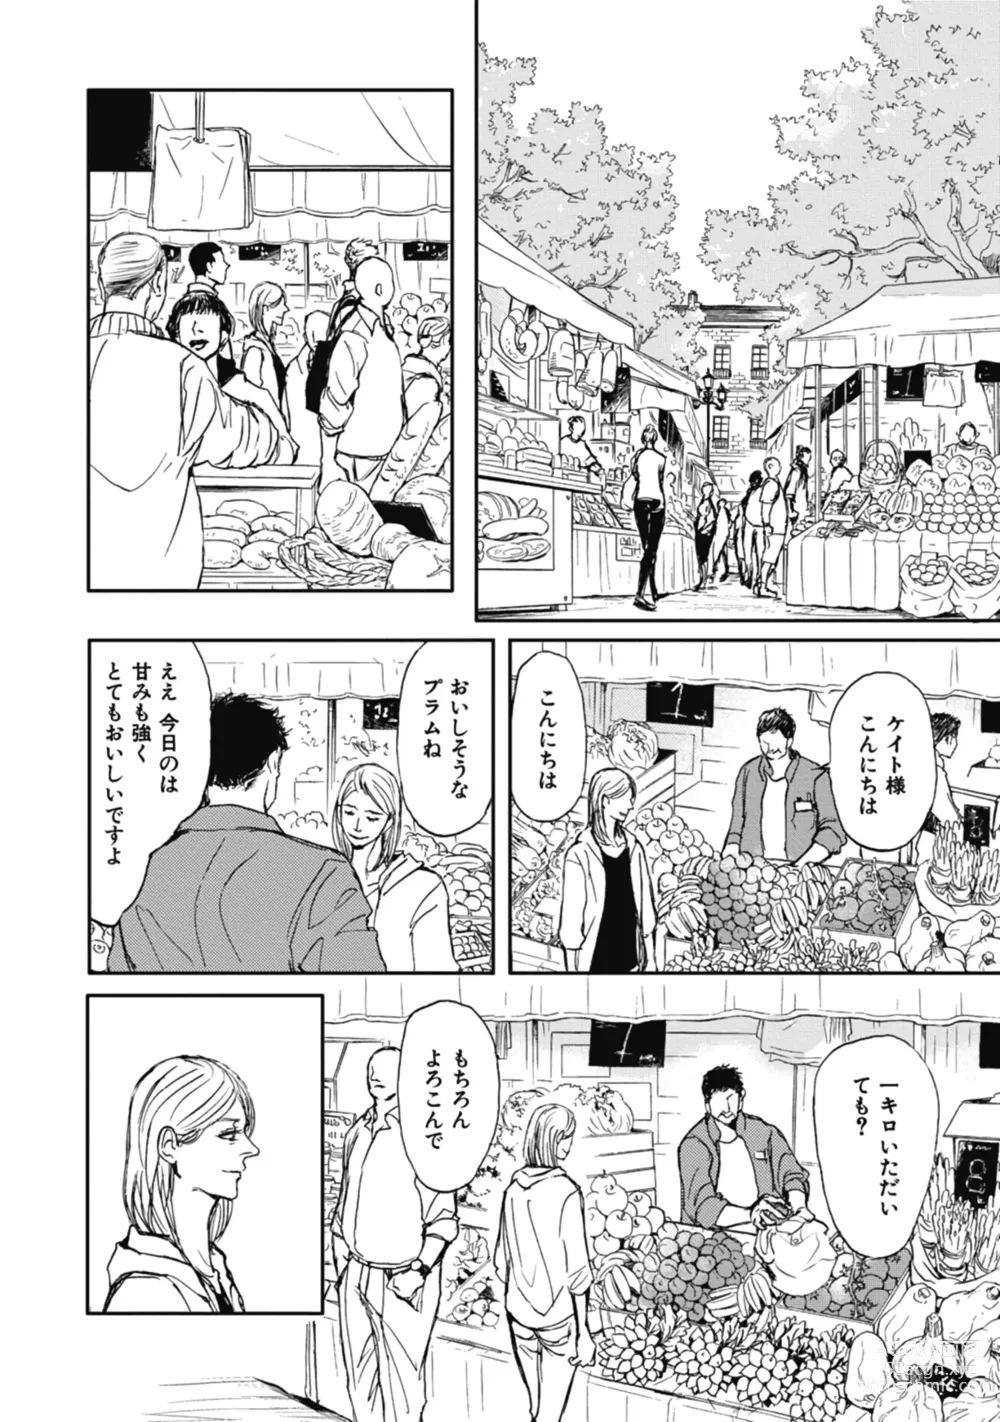 Page 8 of manga Papas Assassin. ~Futari Shite Tonde Yuku.~